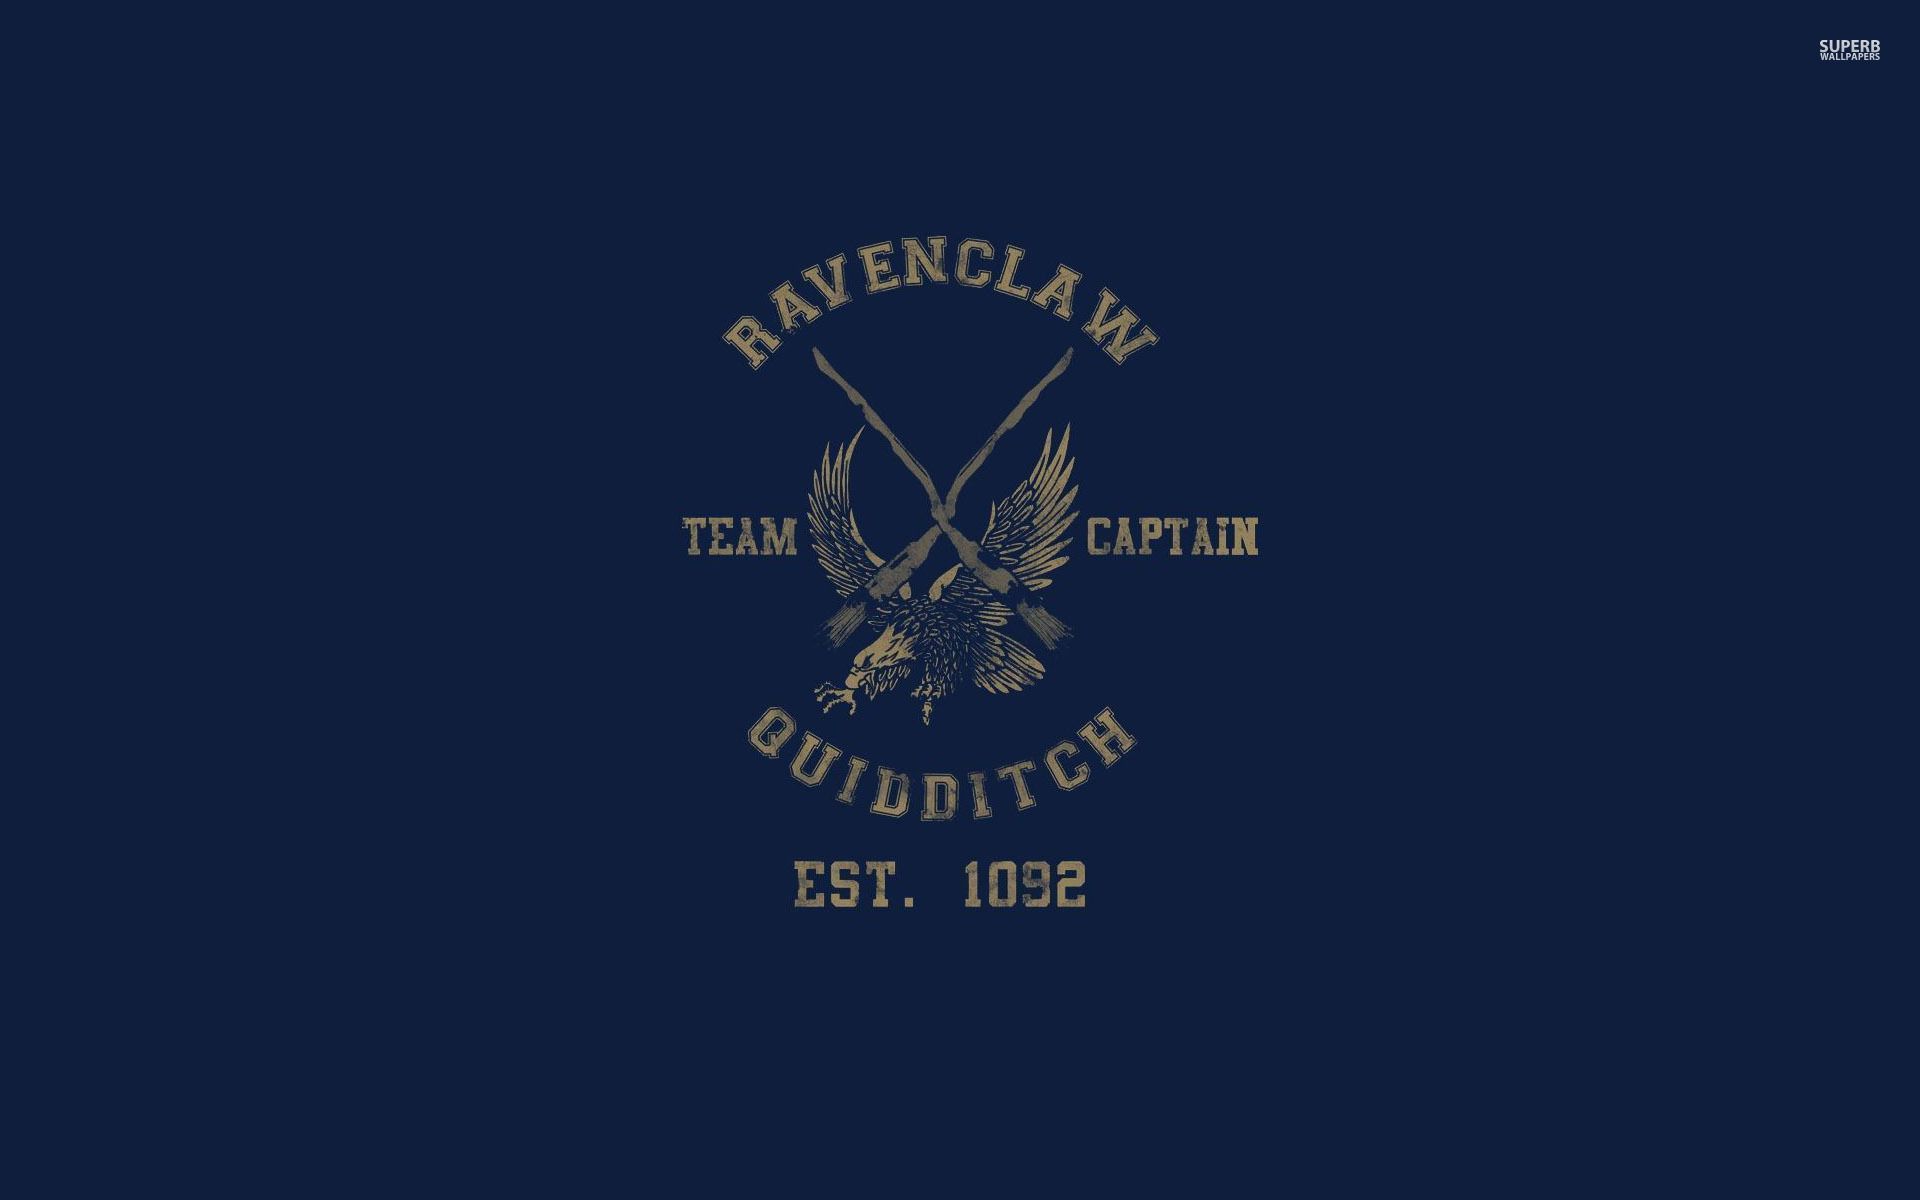 The logo for avengers guild - Harry Potter, Ravenclaw